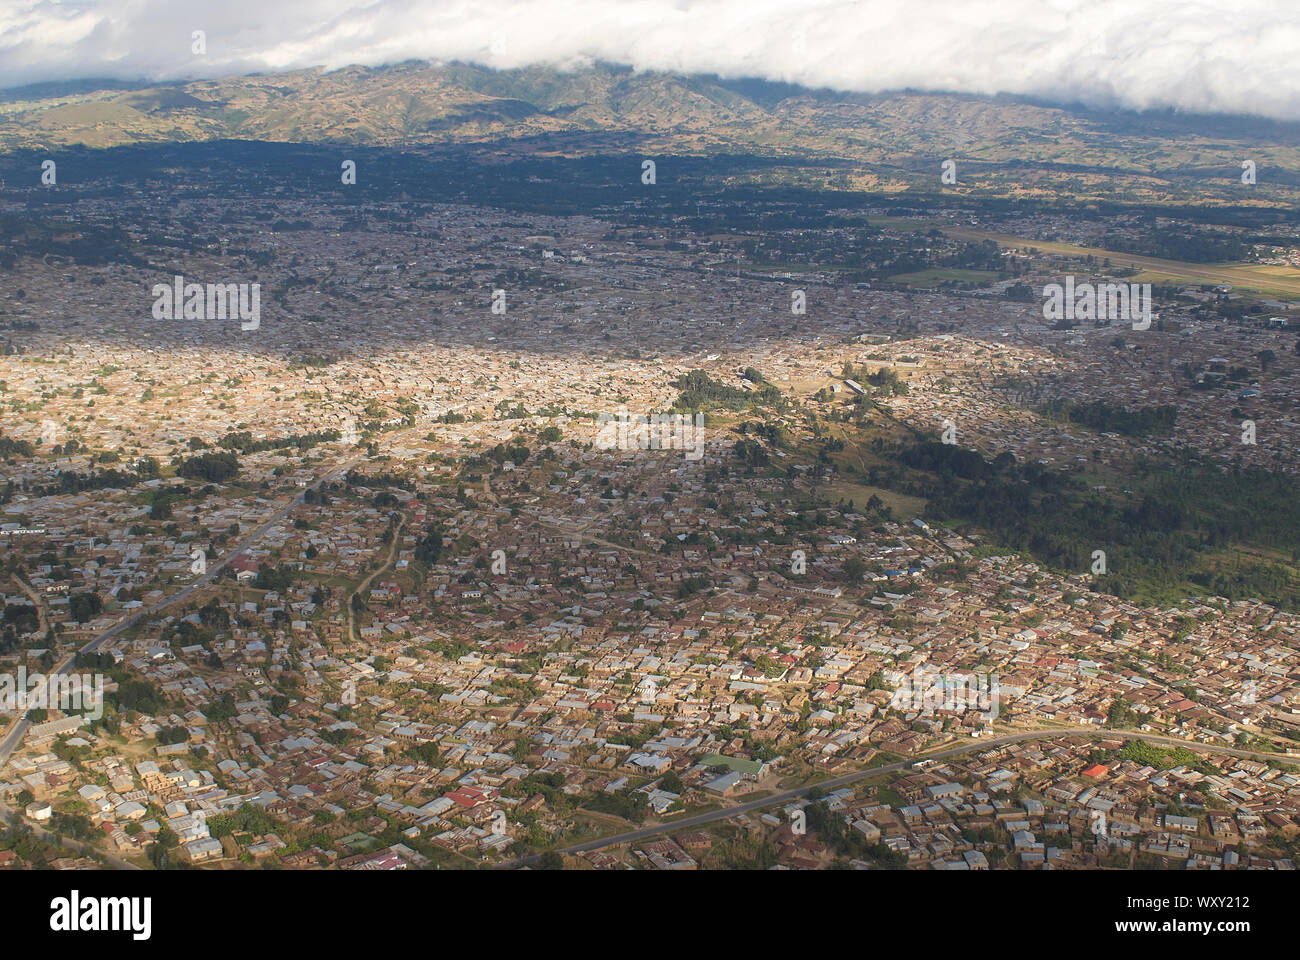 Aerial view of Mbeya city, Tanzania Stock Photo